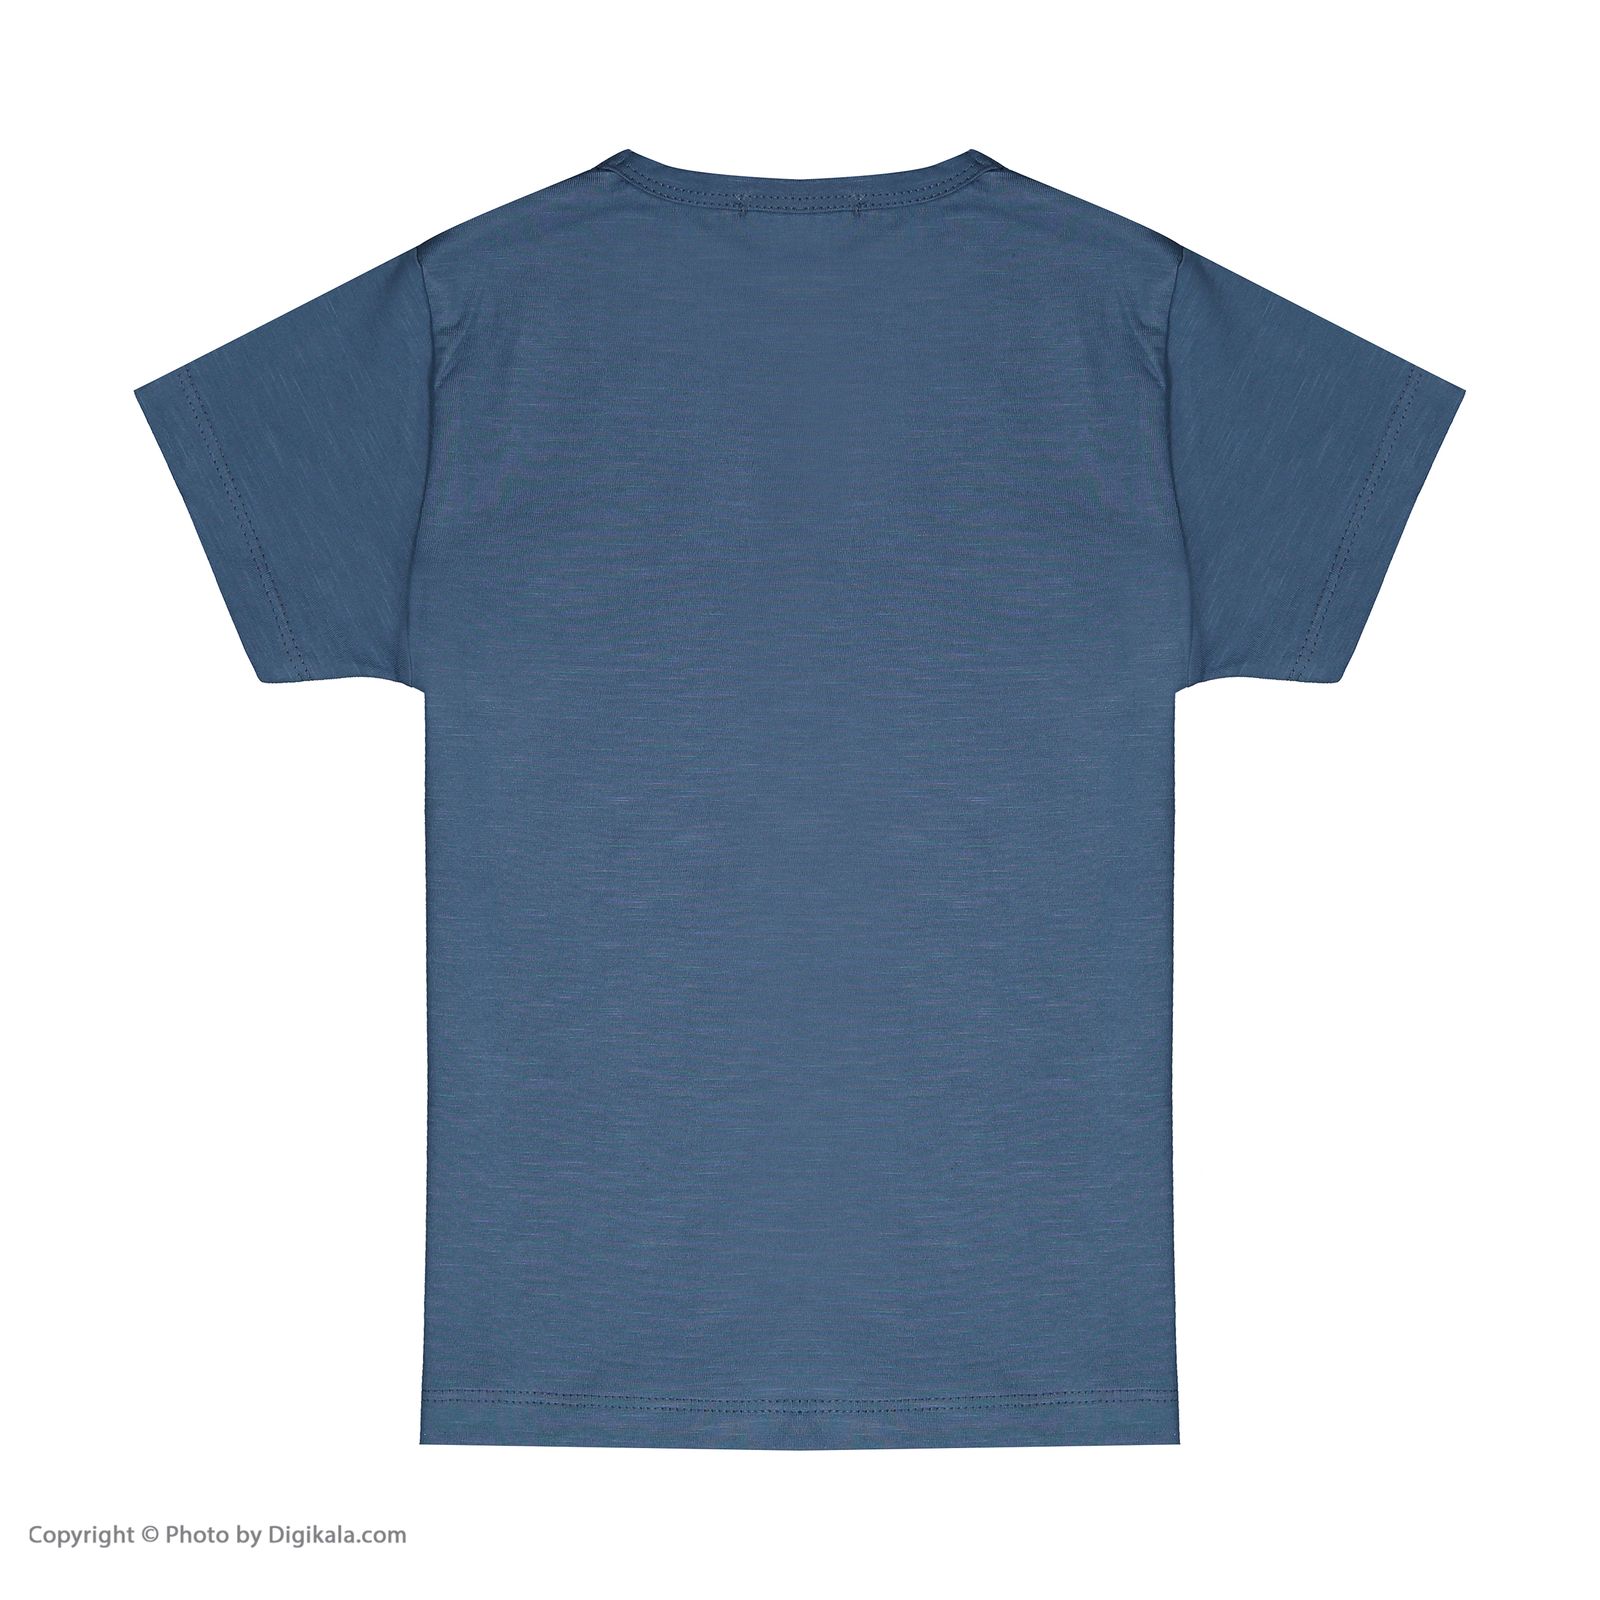 تی شرت پسرانه بی کی مدل 2211119-57 -  - 3